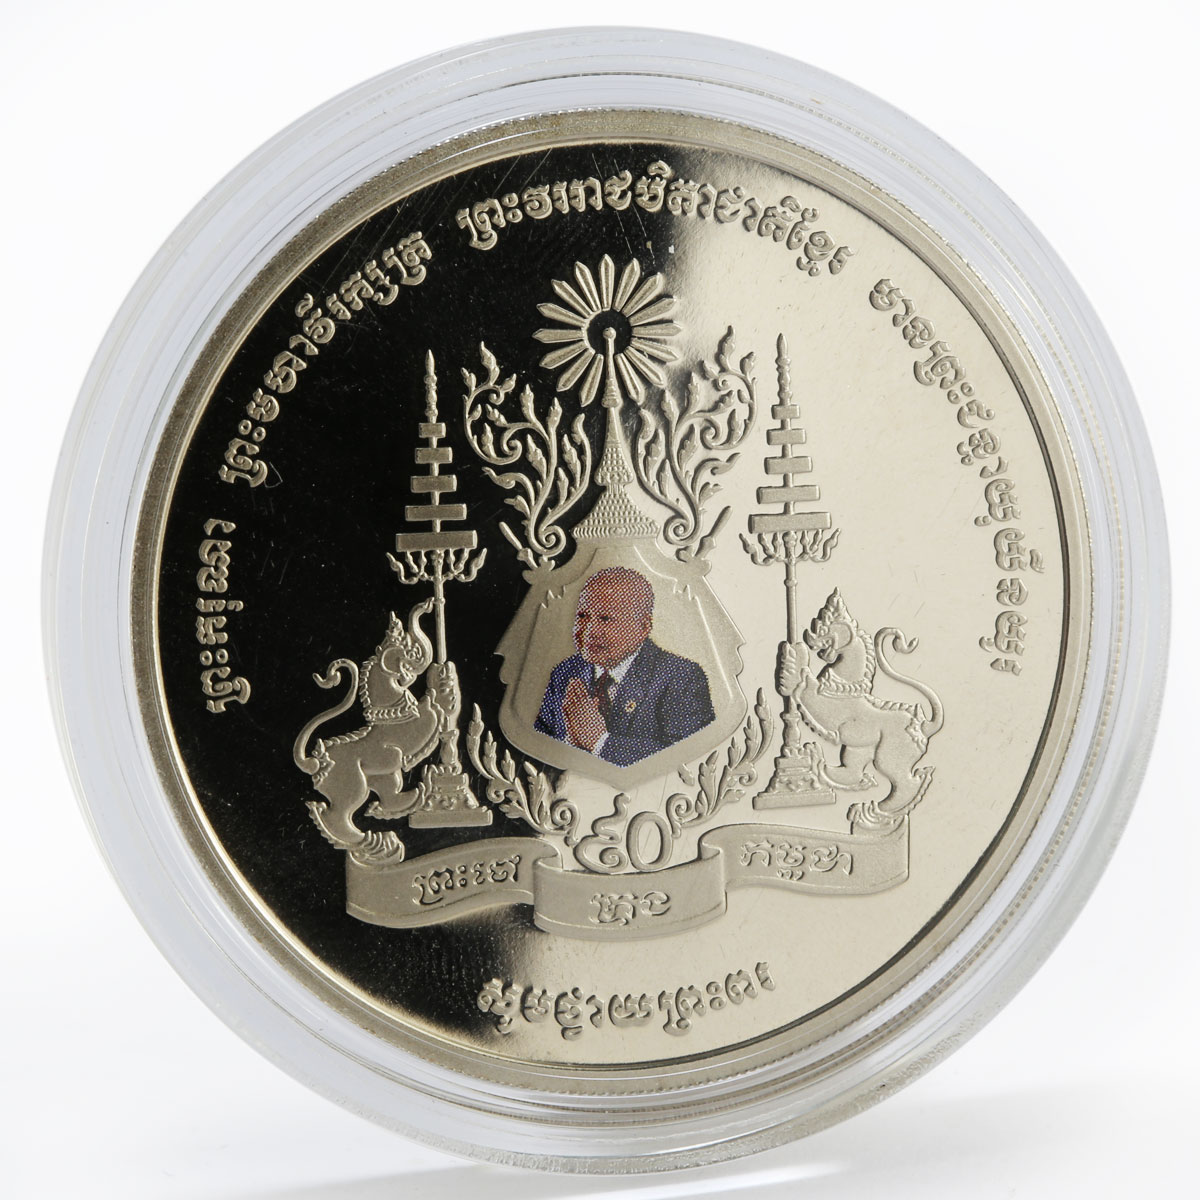 Cambodia Independence Day King Norodom Sihanouk medallion 2011